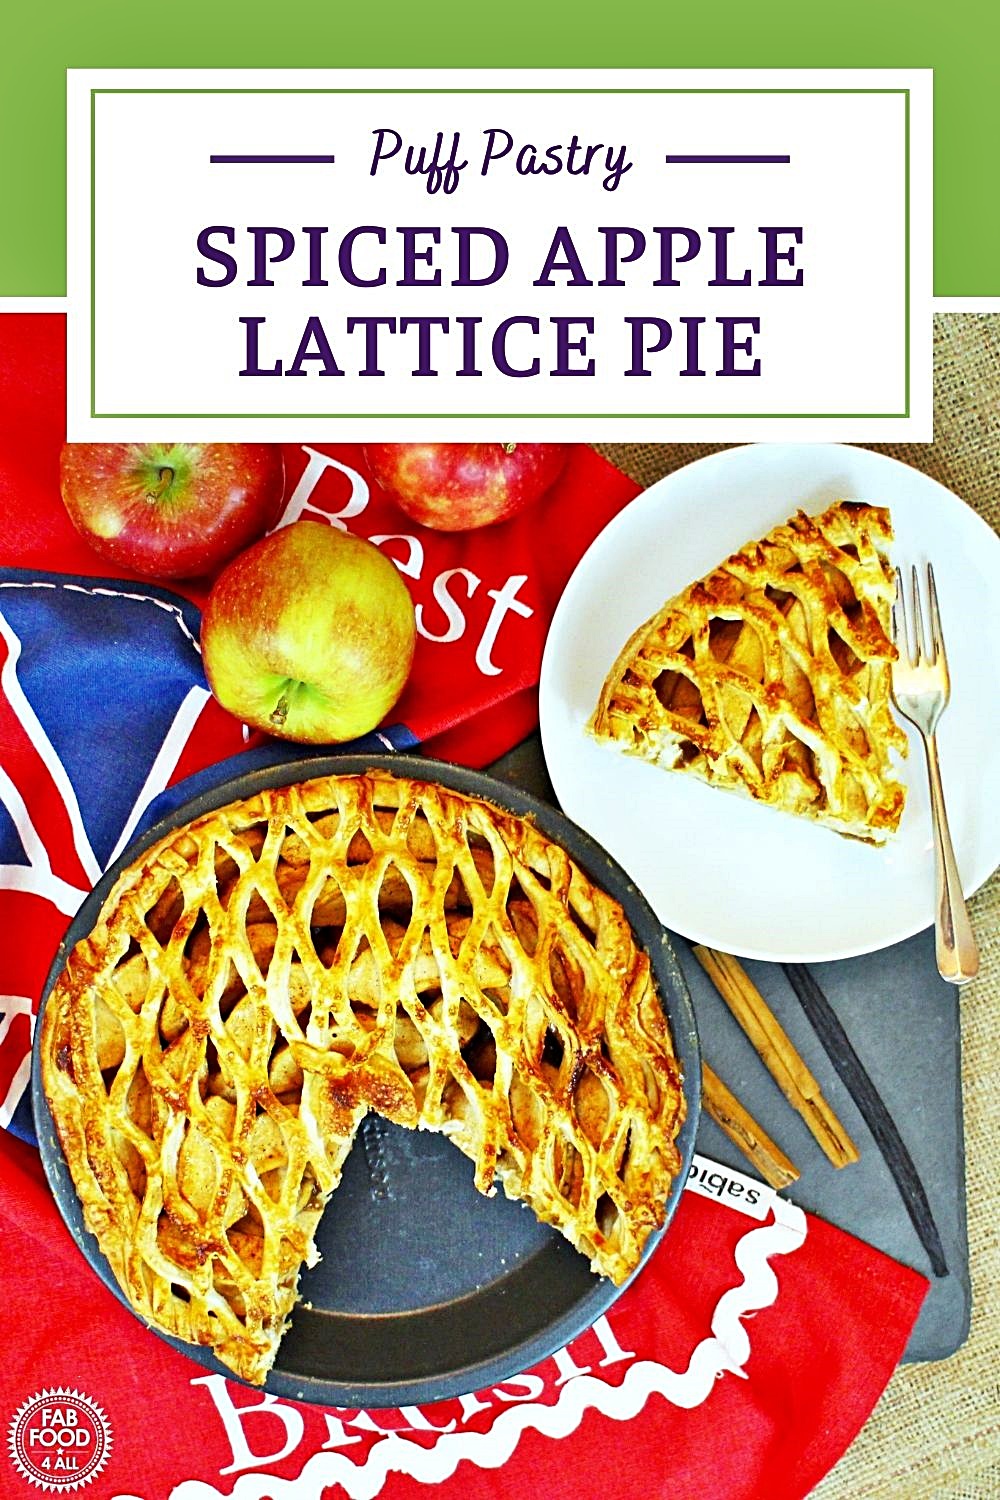 Spiced Apple Lattice Pie Pinterest image